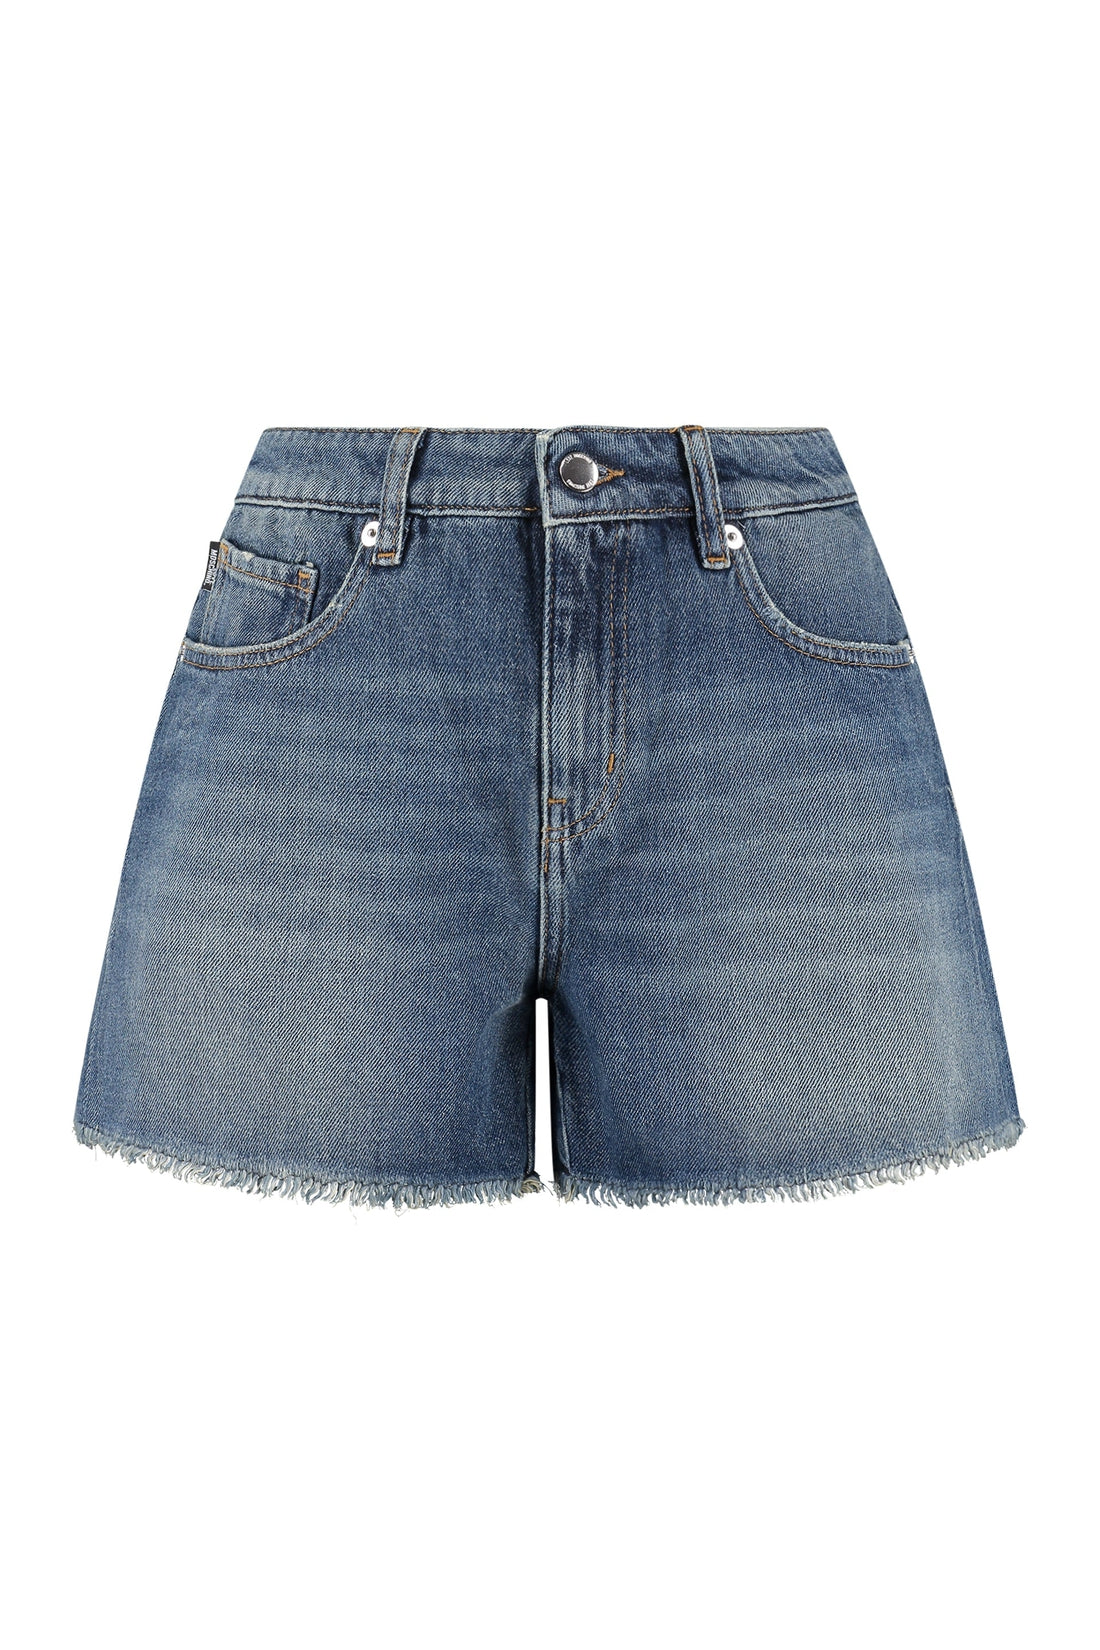 Love Moschino-OUTLET-SALE-Denim shorts-ARCHIVIST